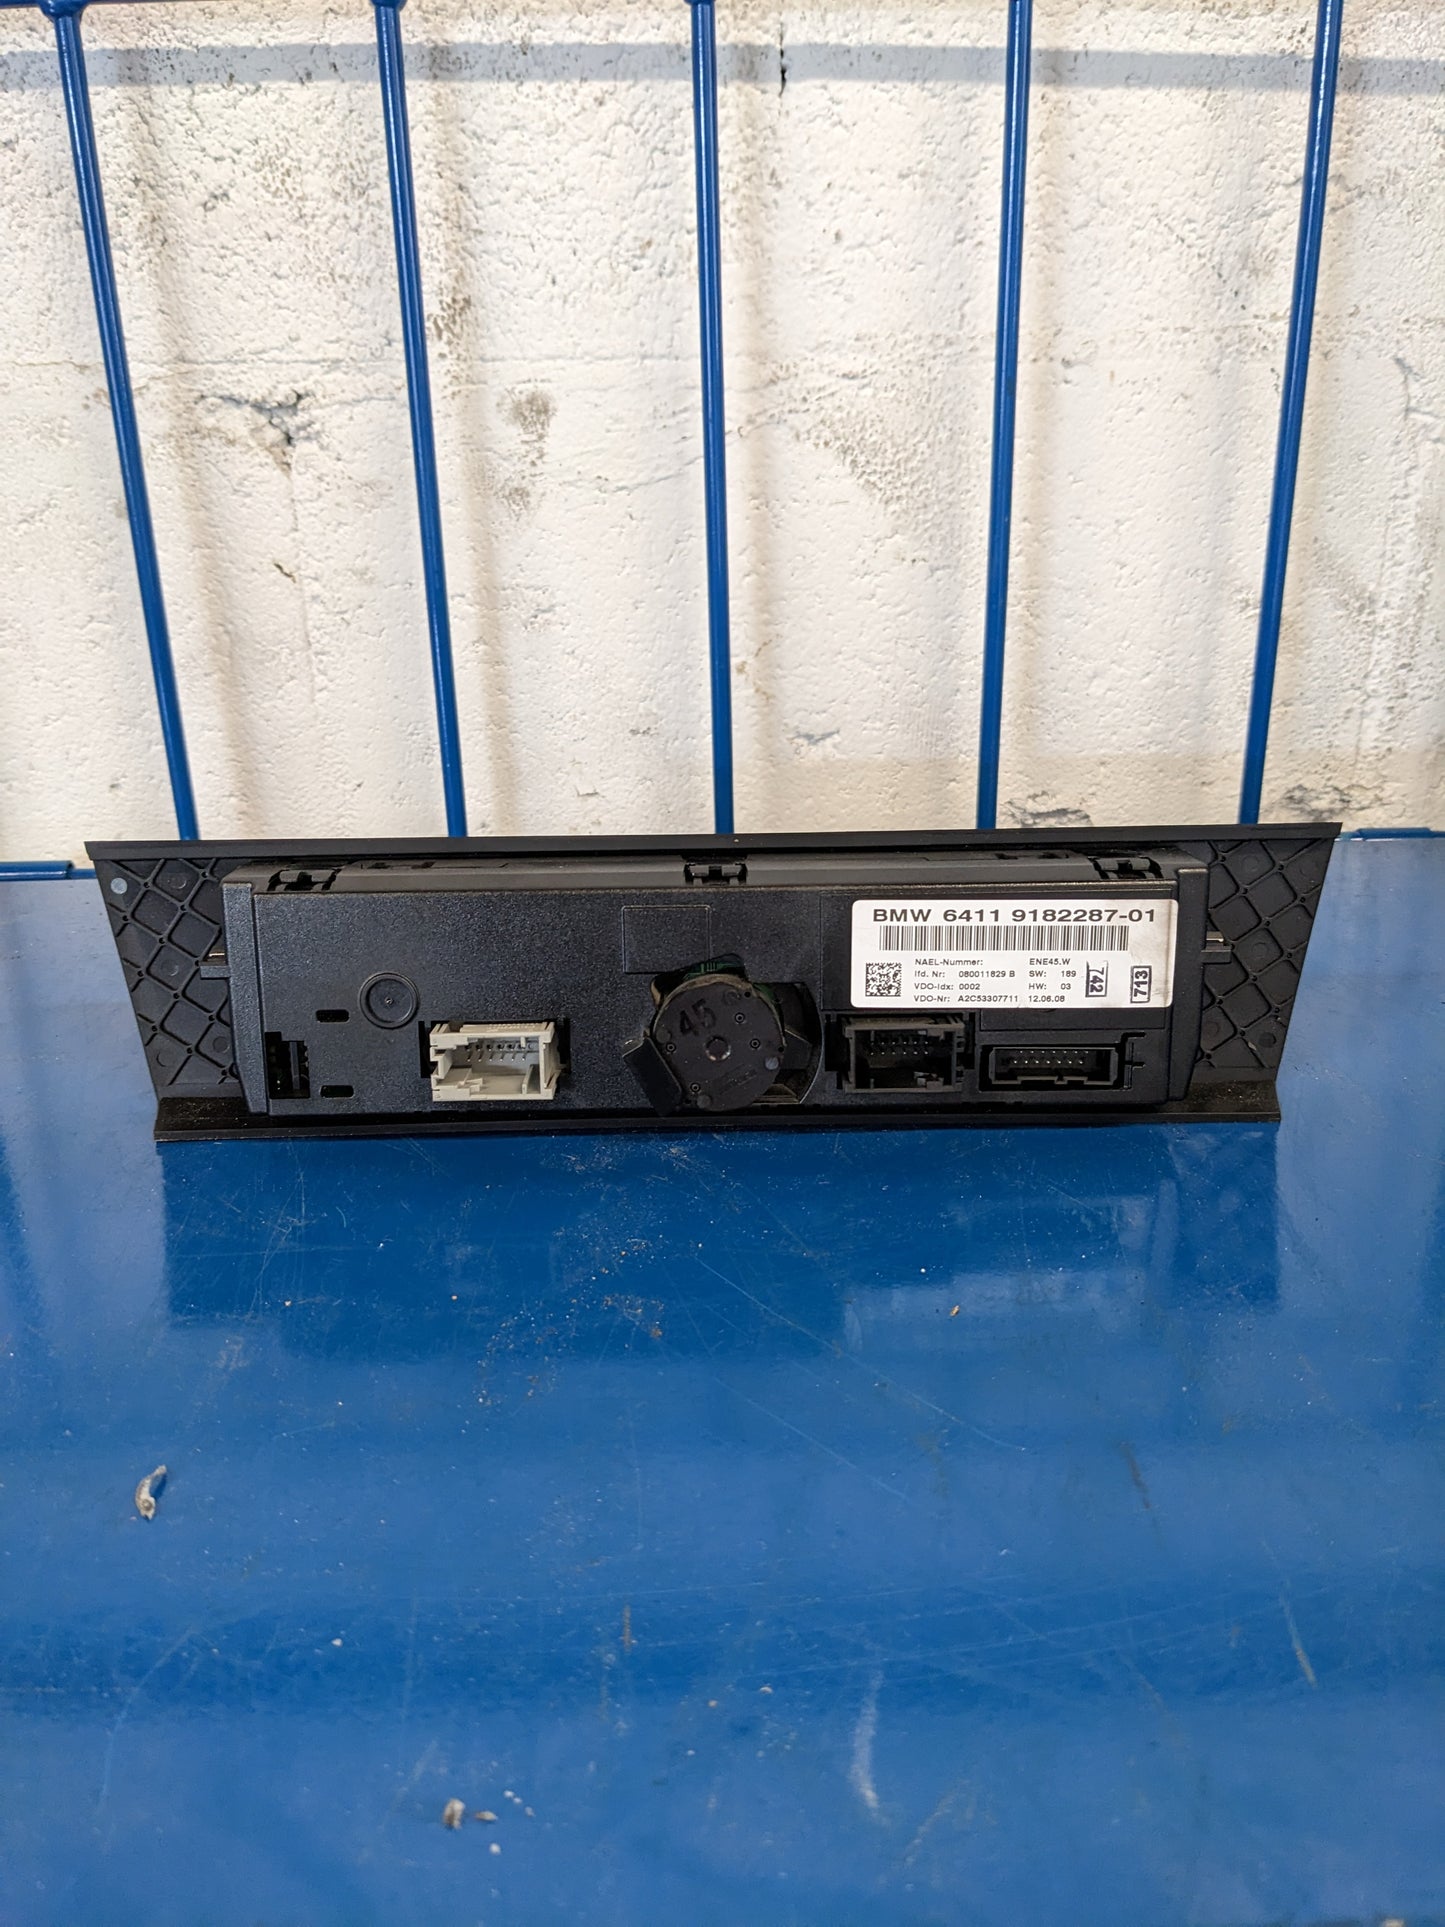 BMW 07-10 E93 M3 AC A/C Heater Climate Control Switch Panel Pre LCI